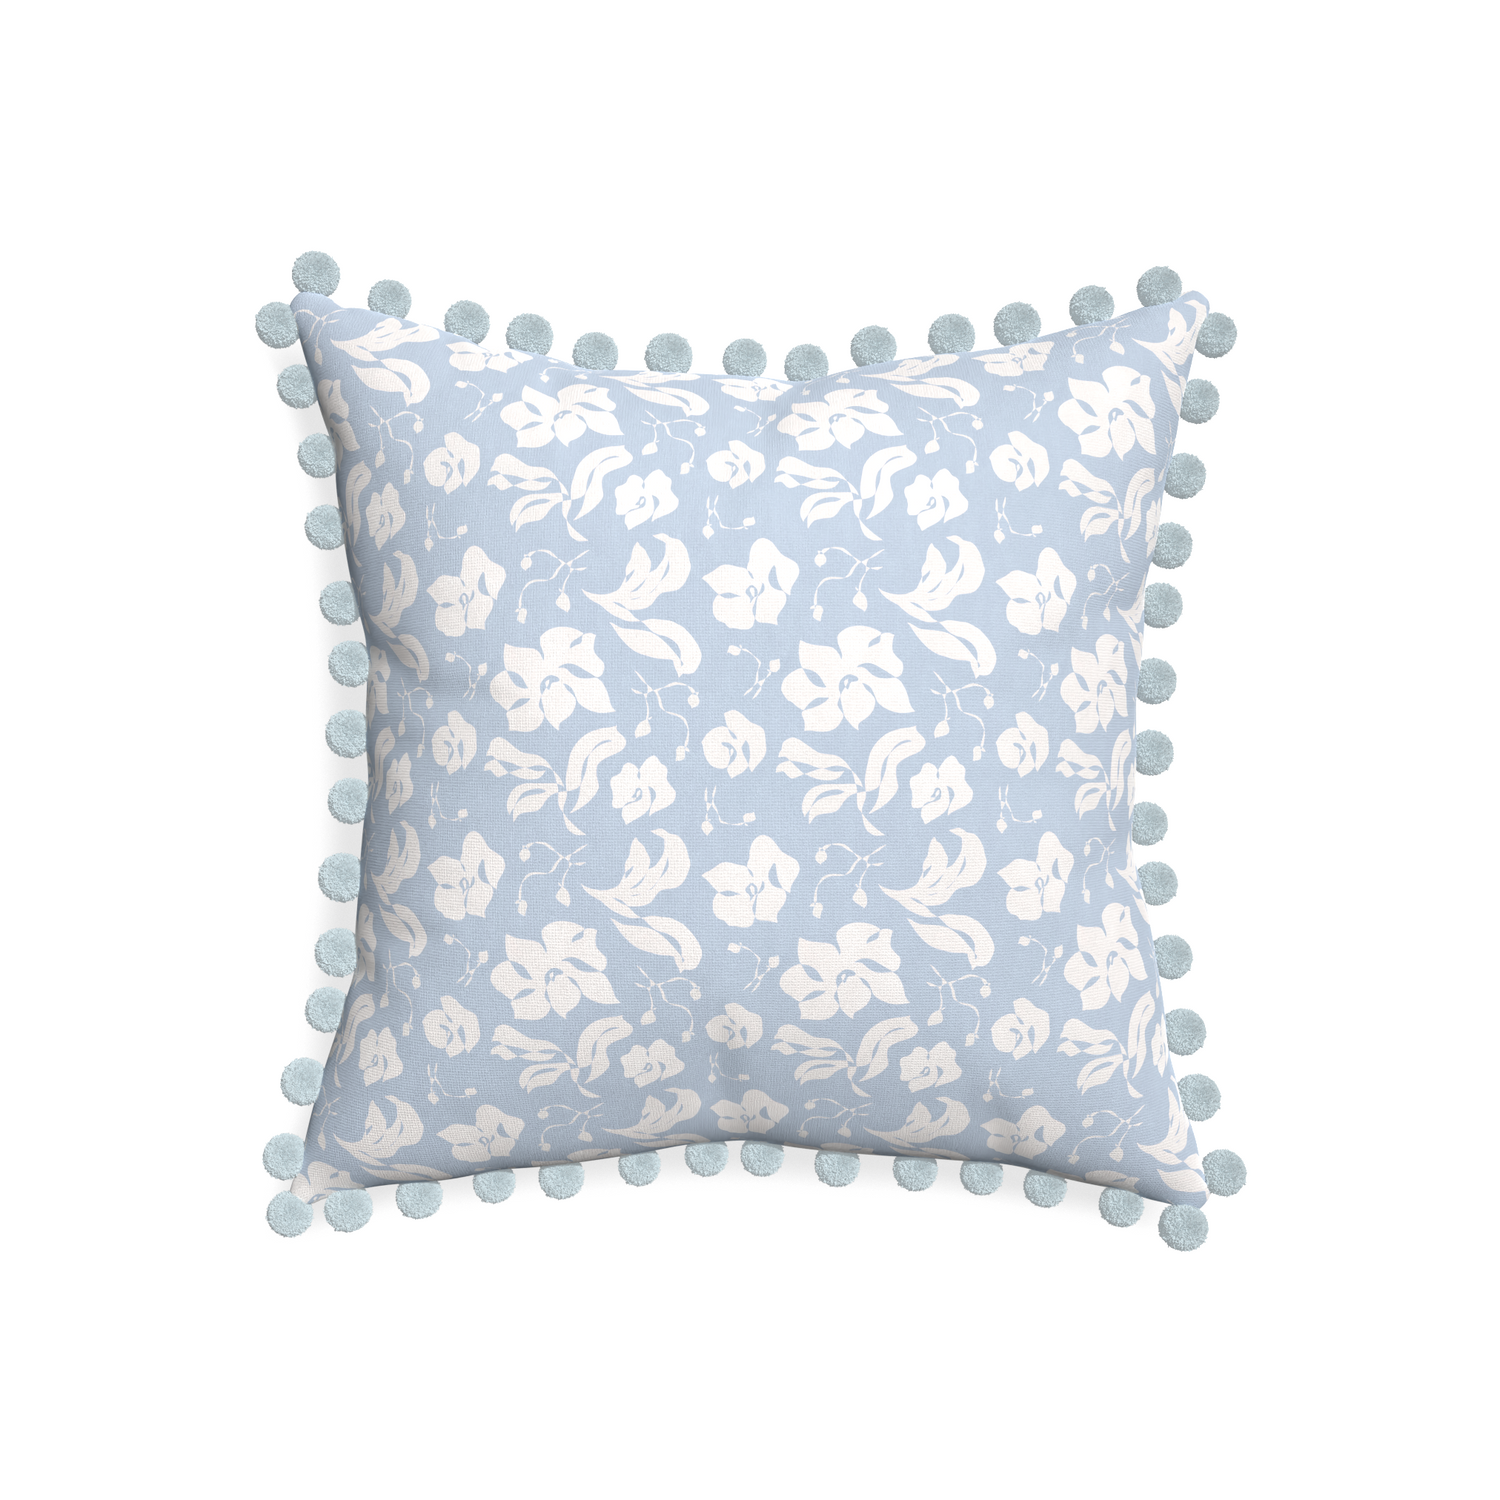 20-square georgia custom pillow with powder pom pom on white background